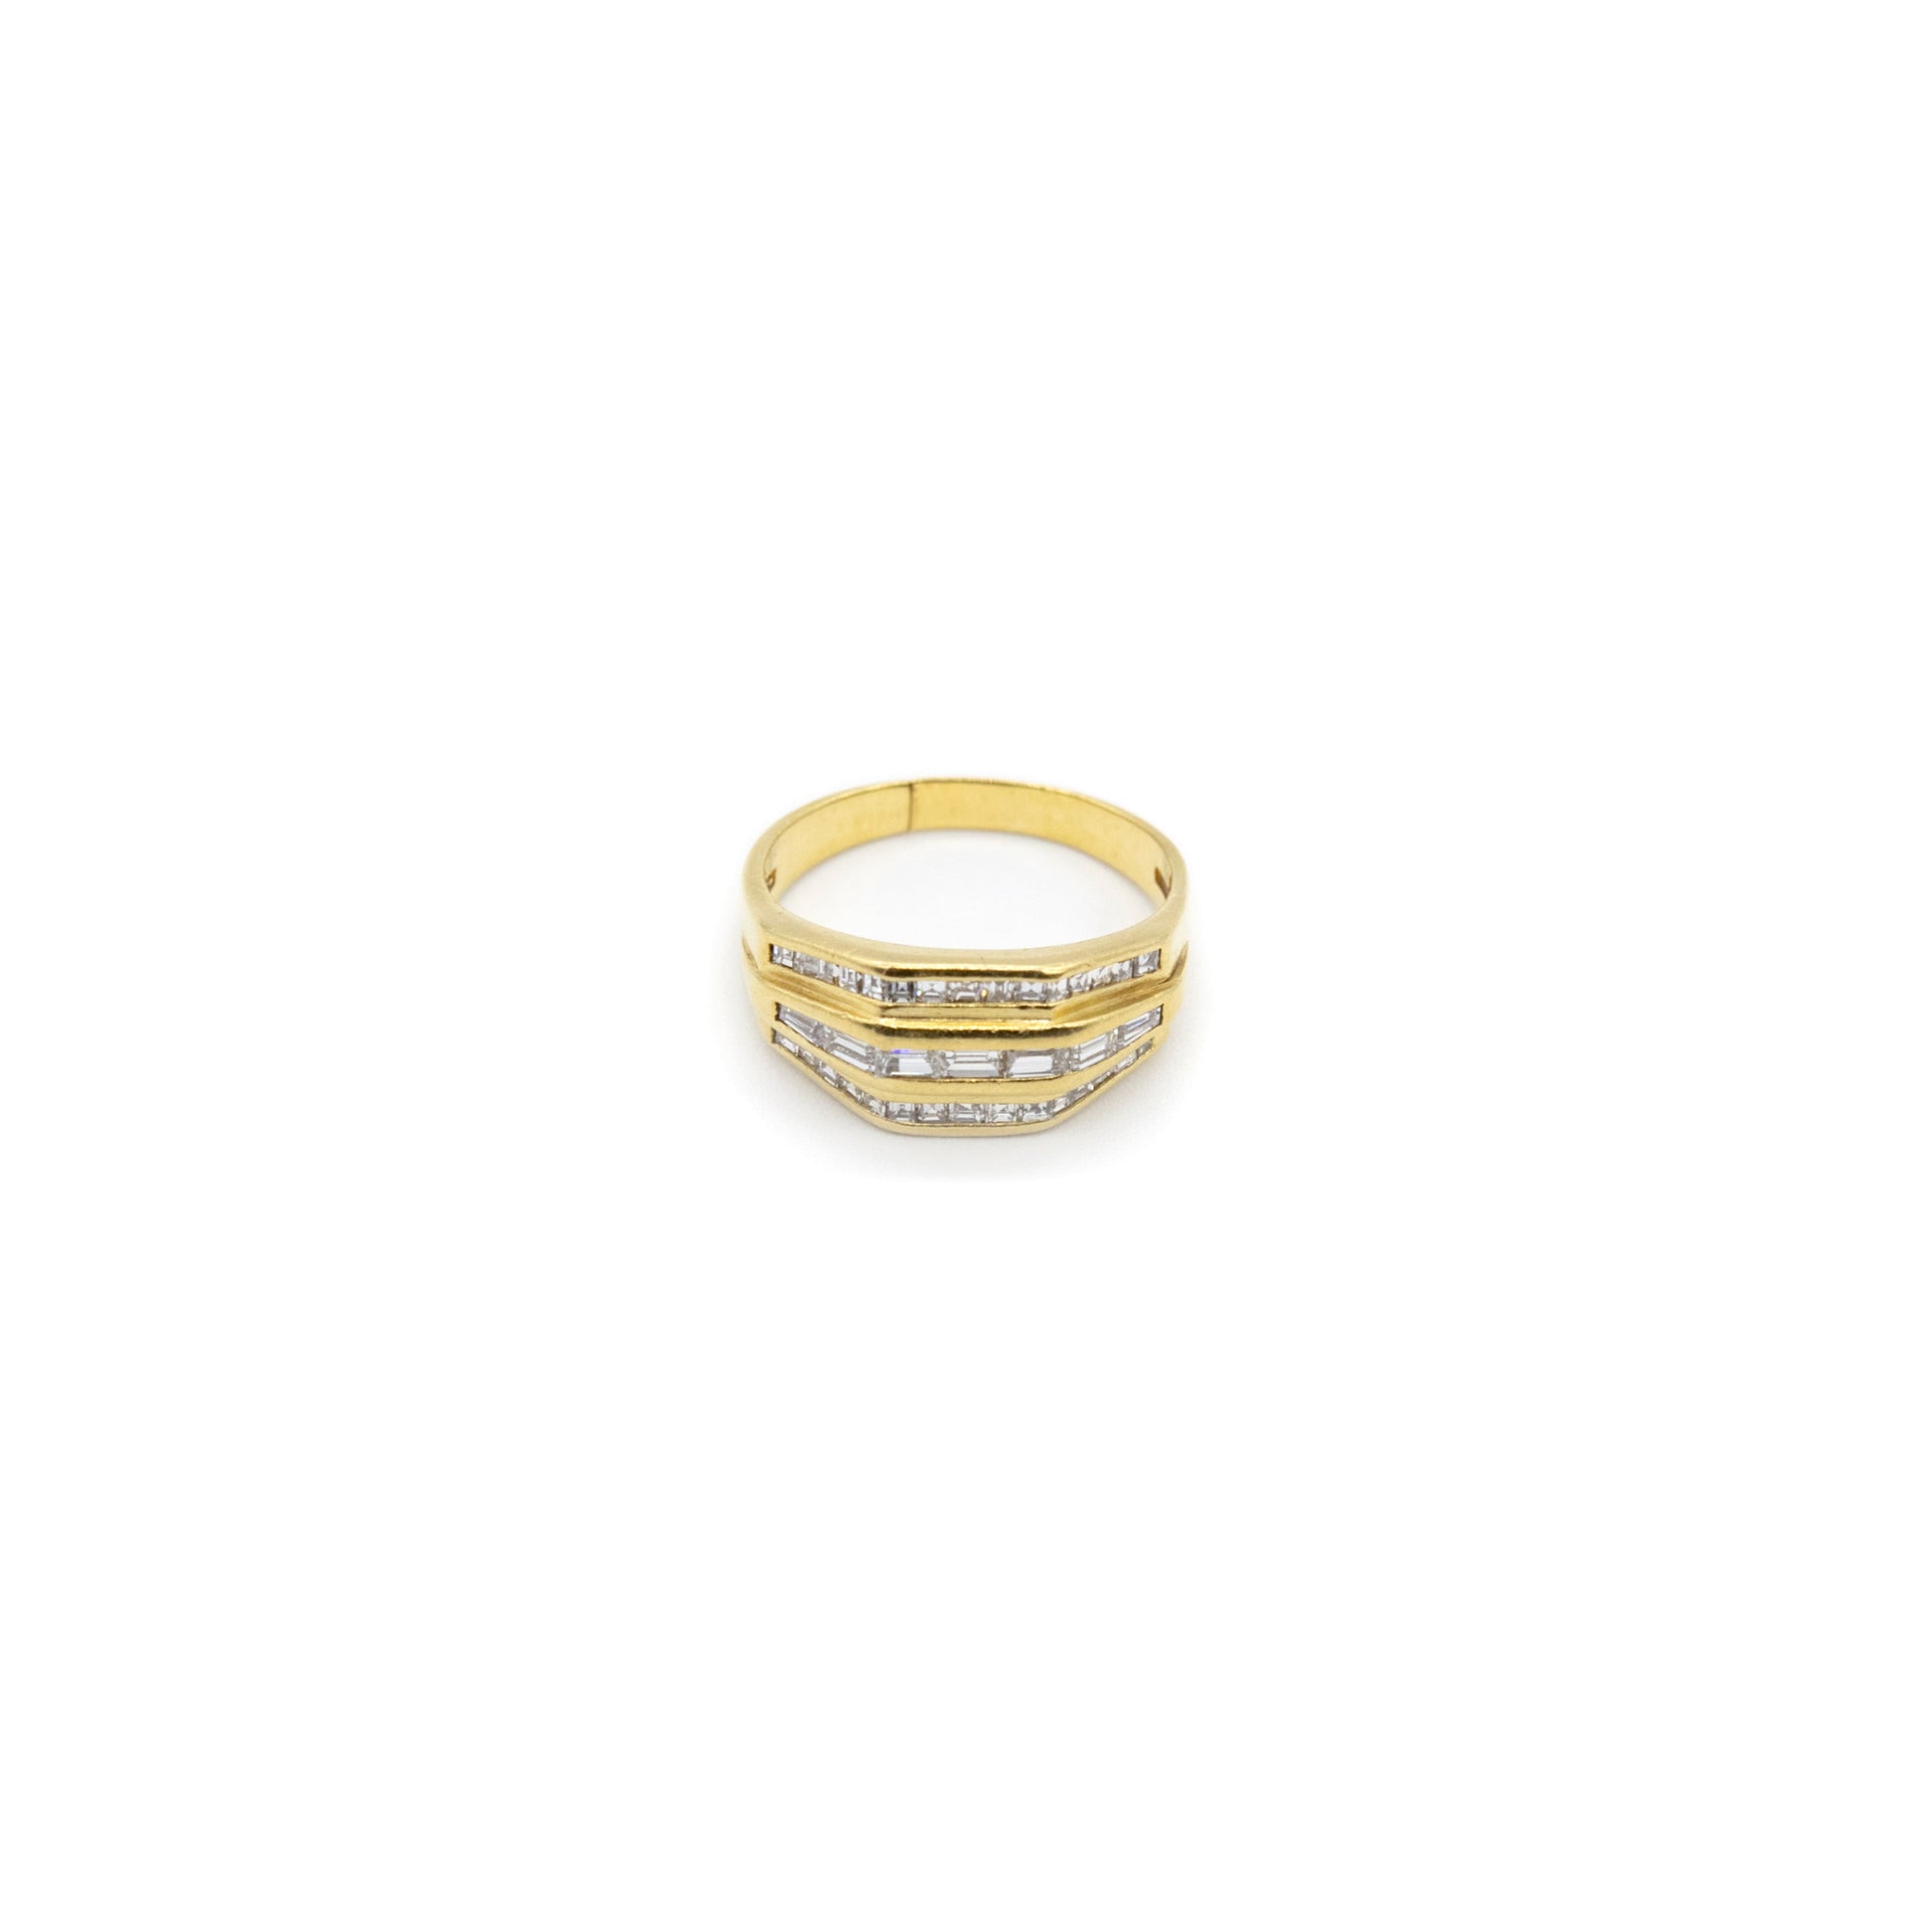 Vintage 18ct Gold Diamonds Ring For Women | Futura |Vintage Jewelry | Lil Milan